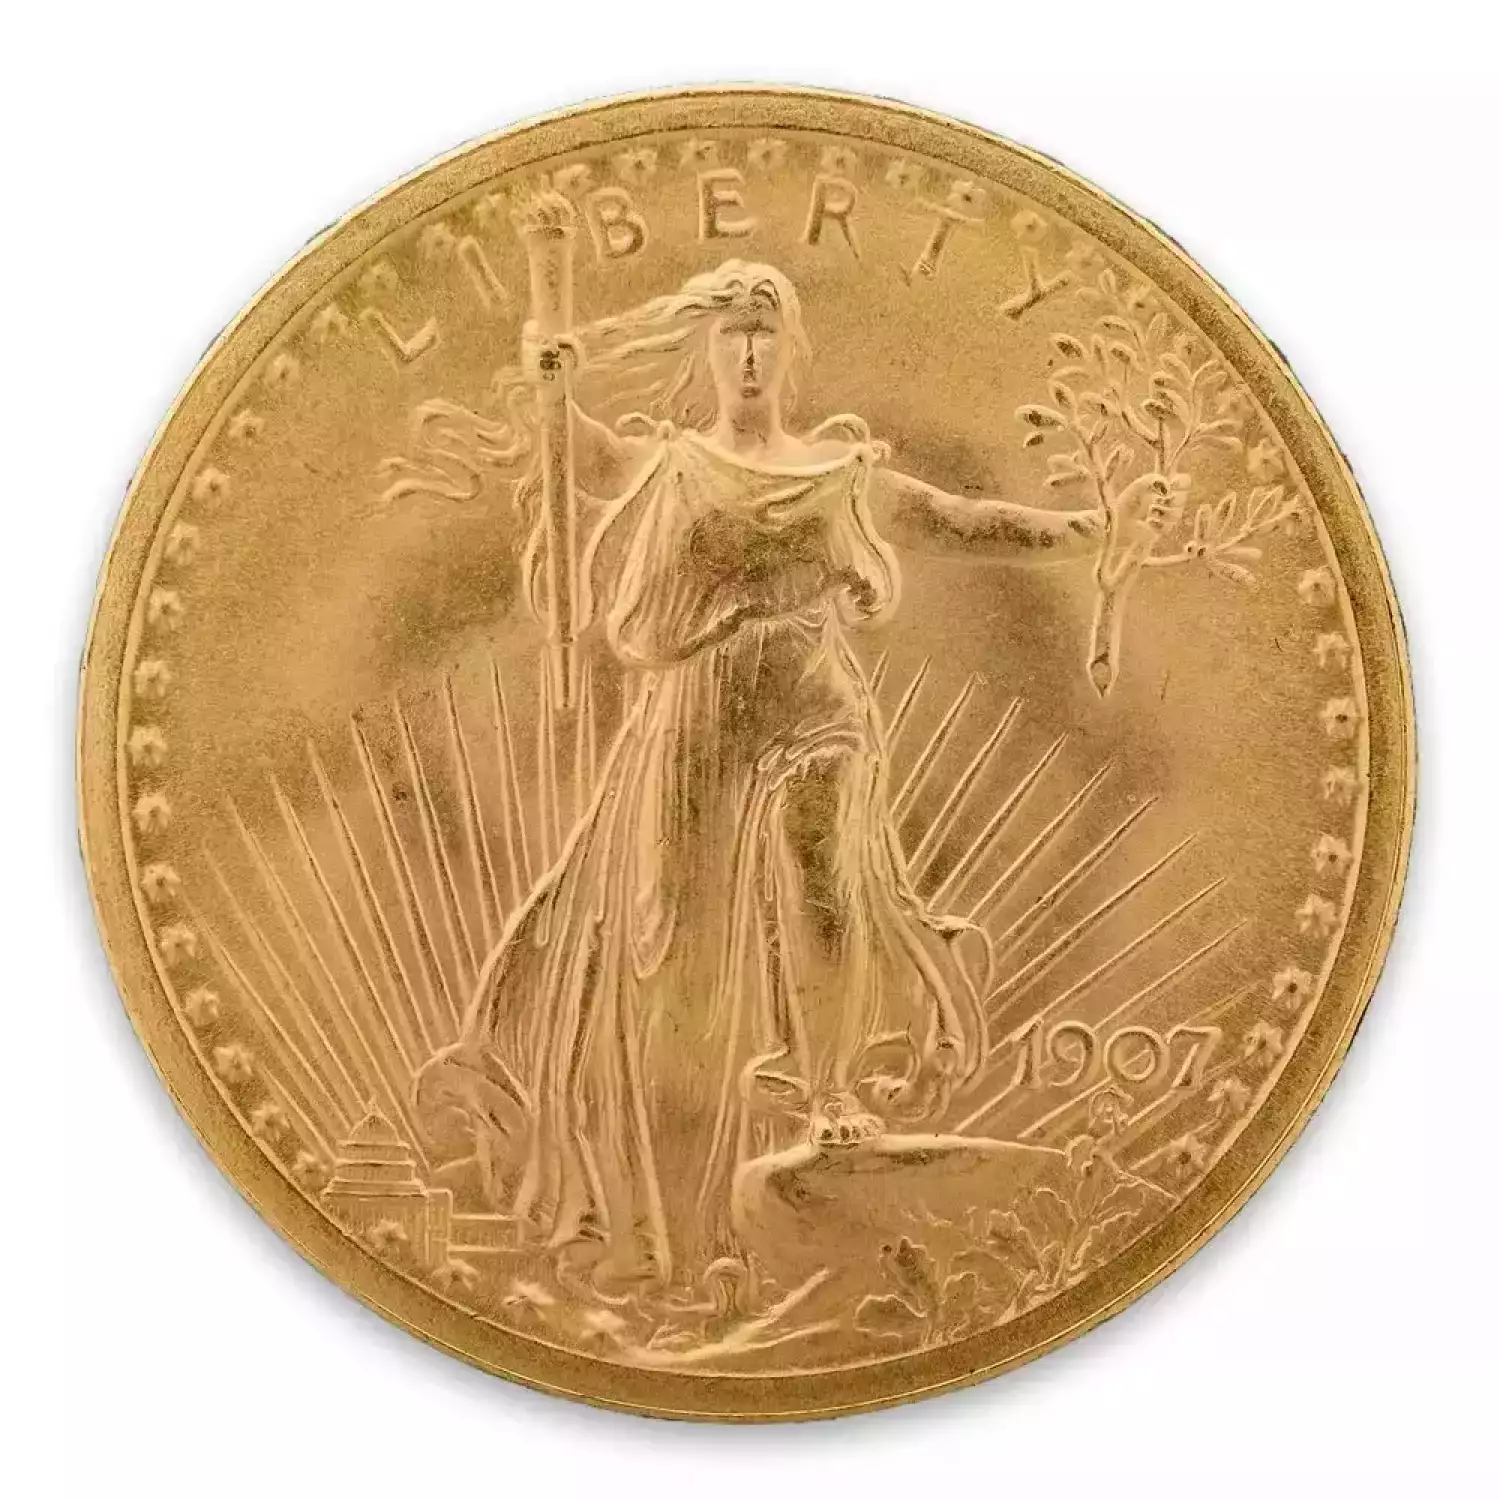 St. Gaudens $20 (1907 – 1933) - NGC - MS61